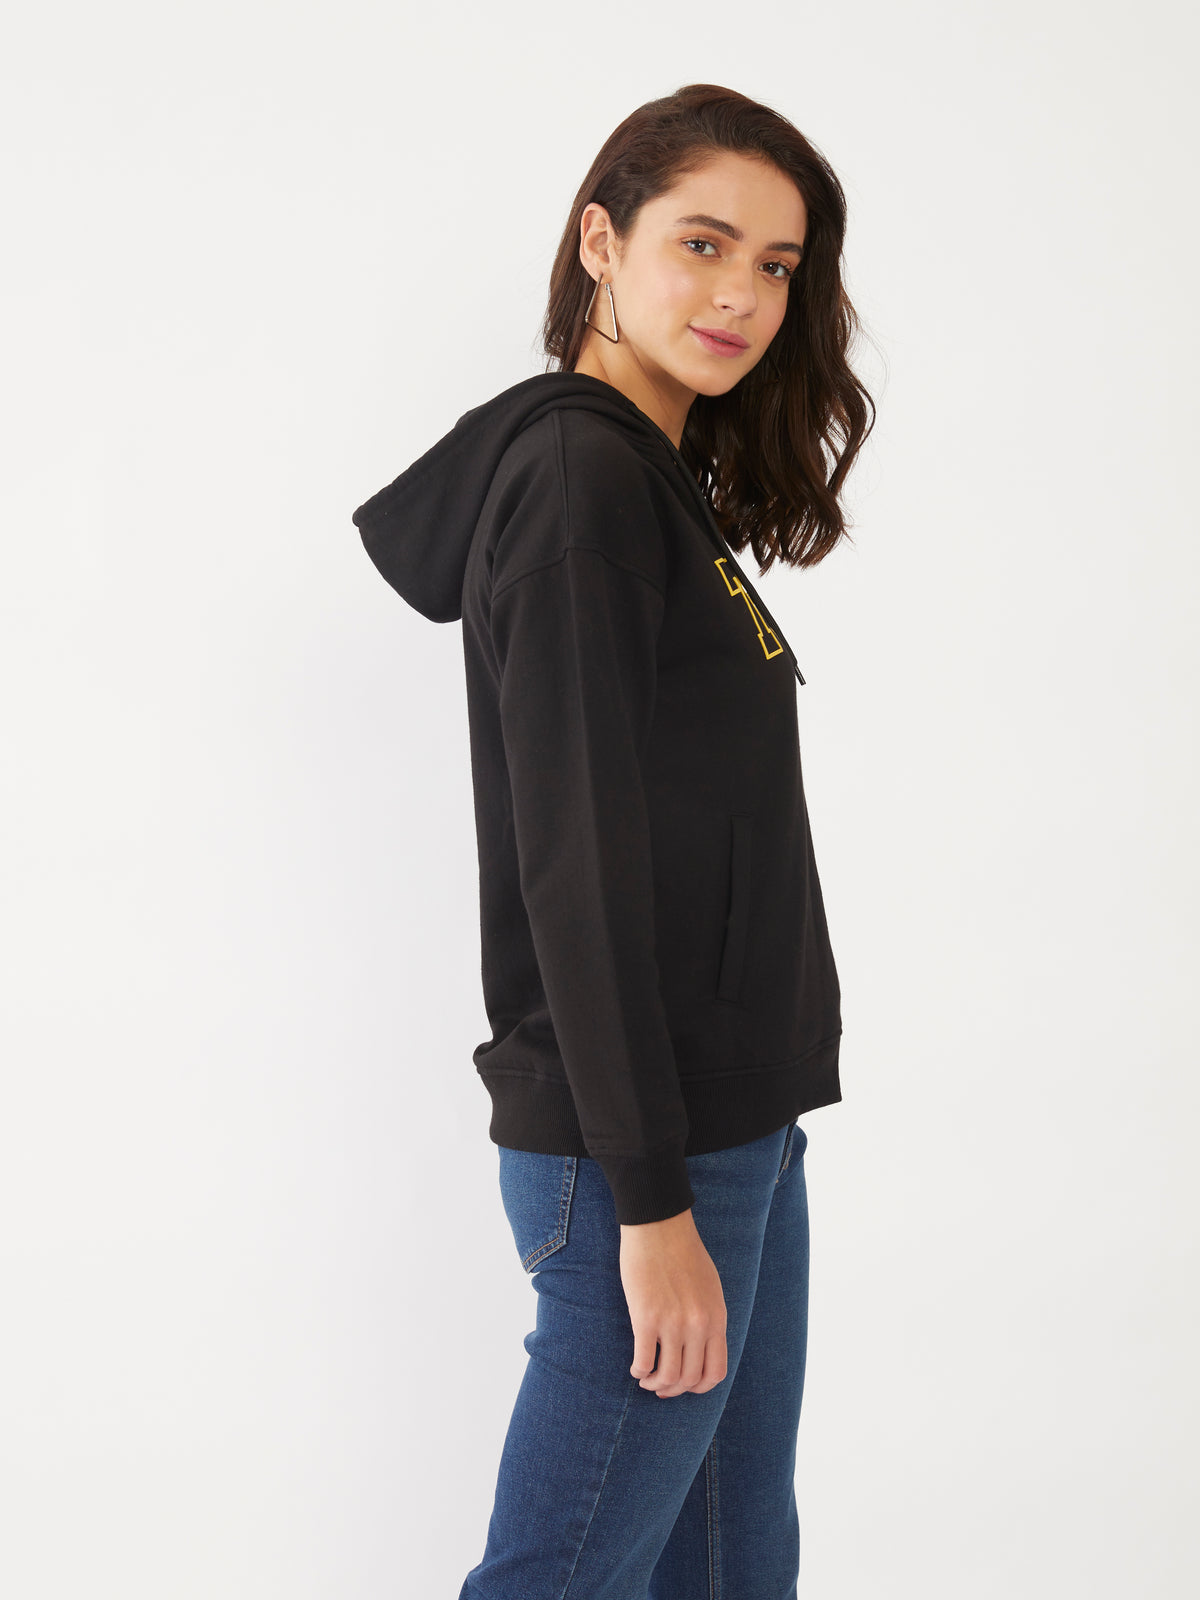 Black Printed Sweatshirt for Women